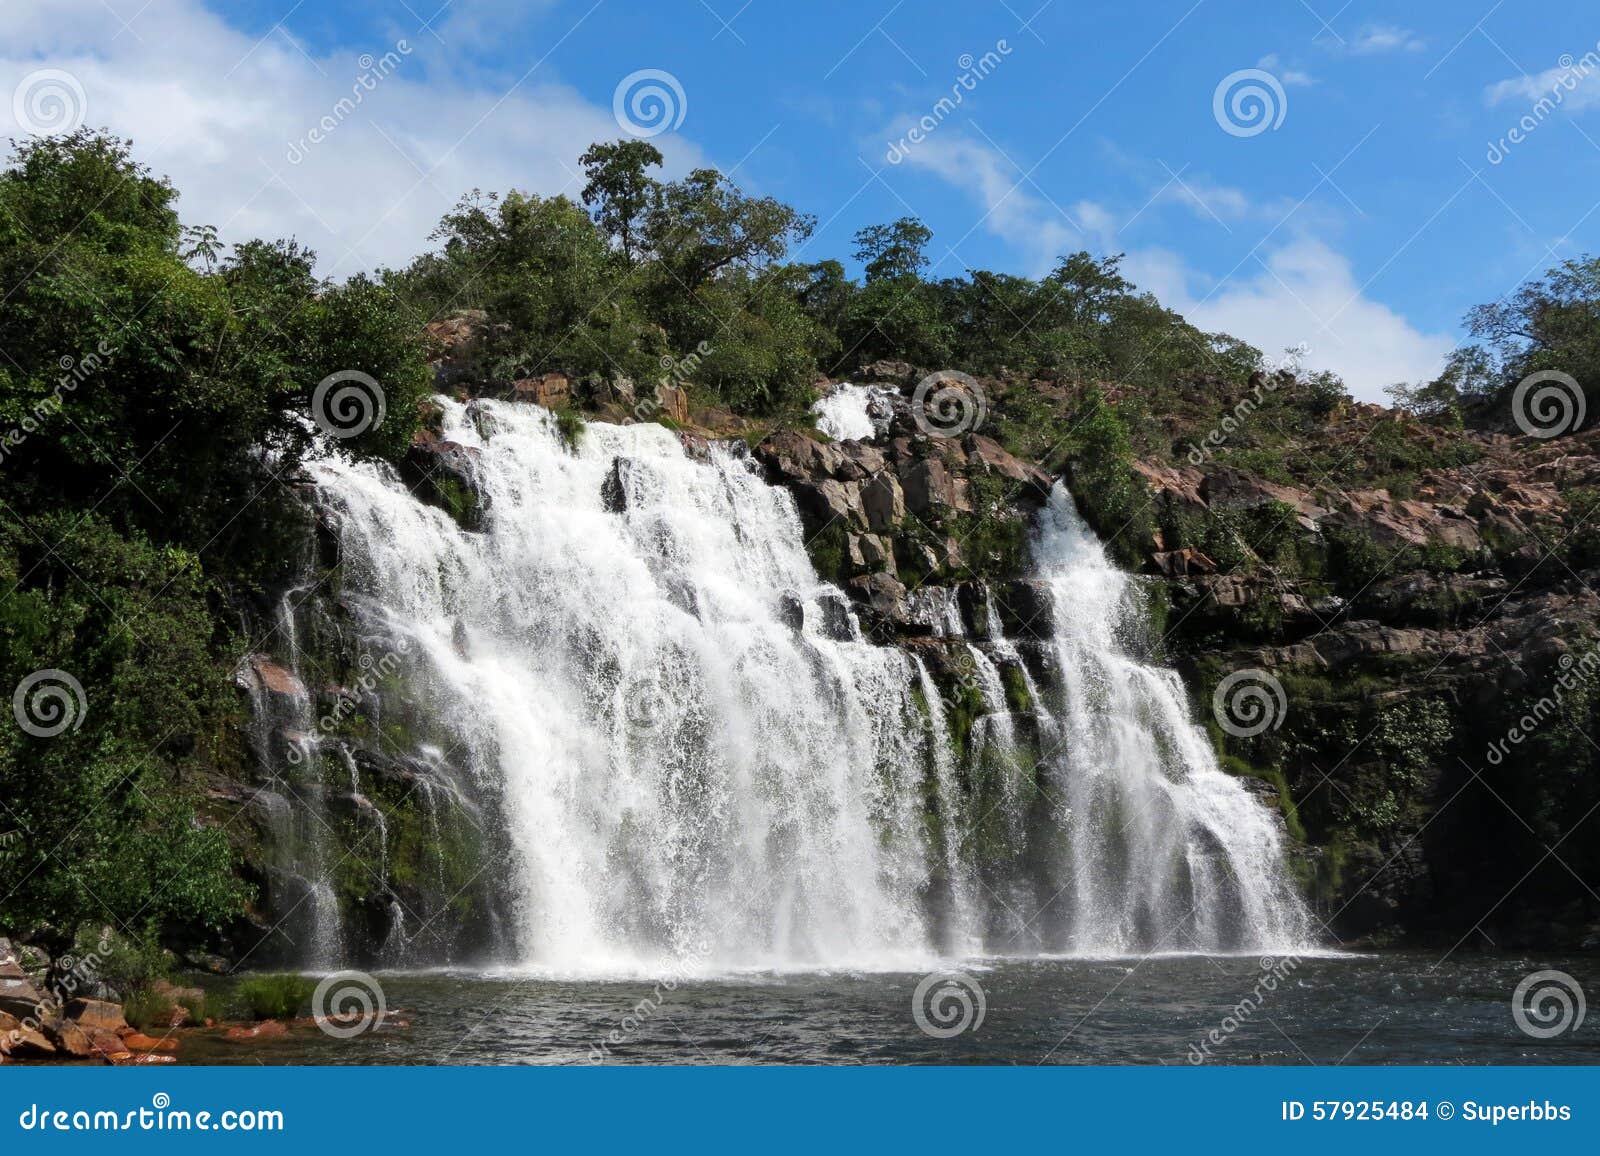 enchanted well waterfall - chapada dos veadeiros - brazil